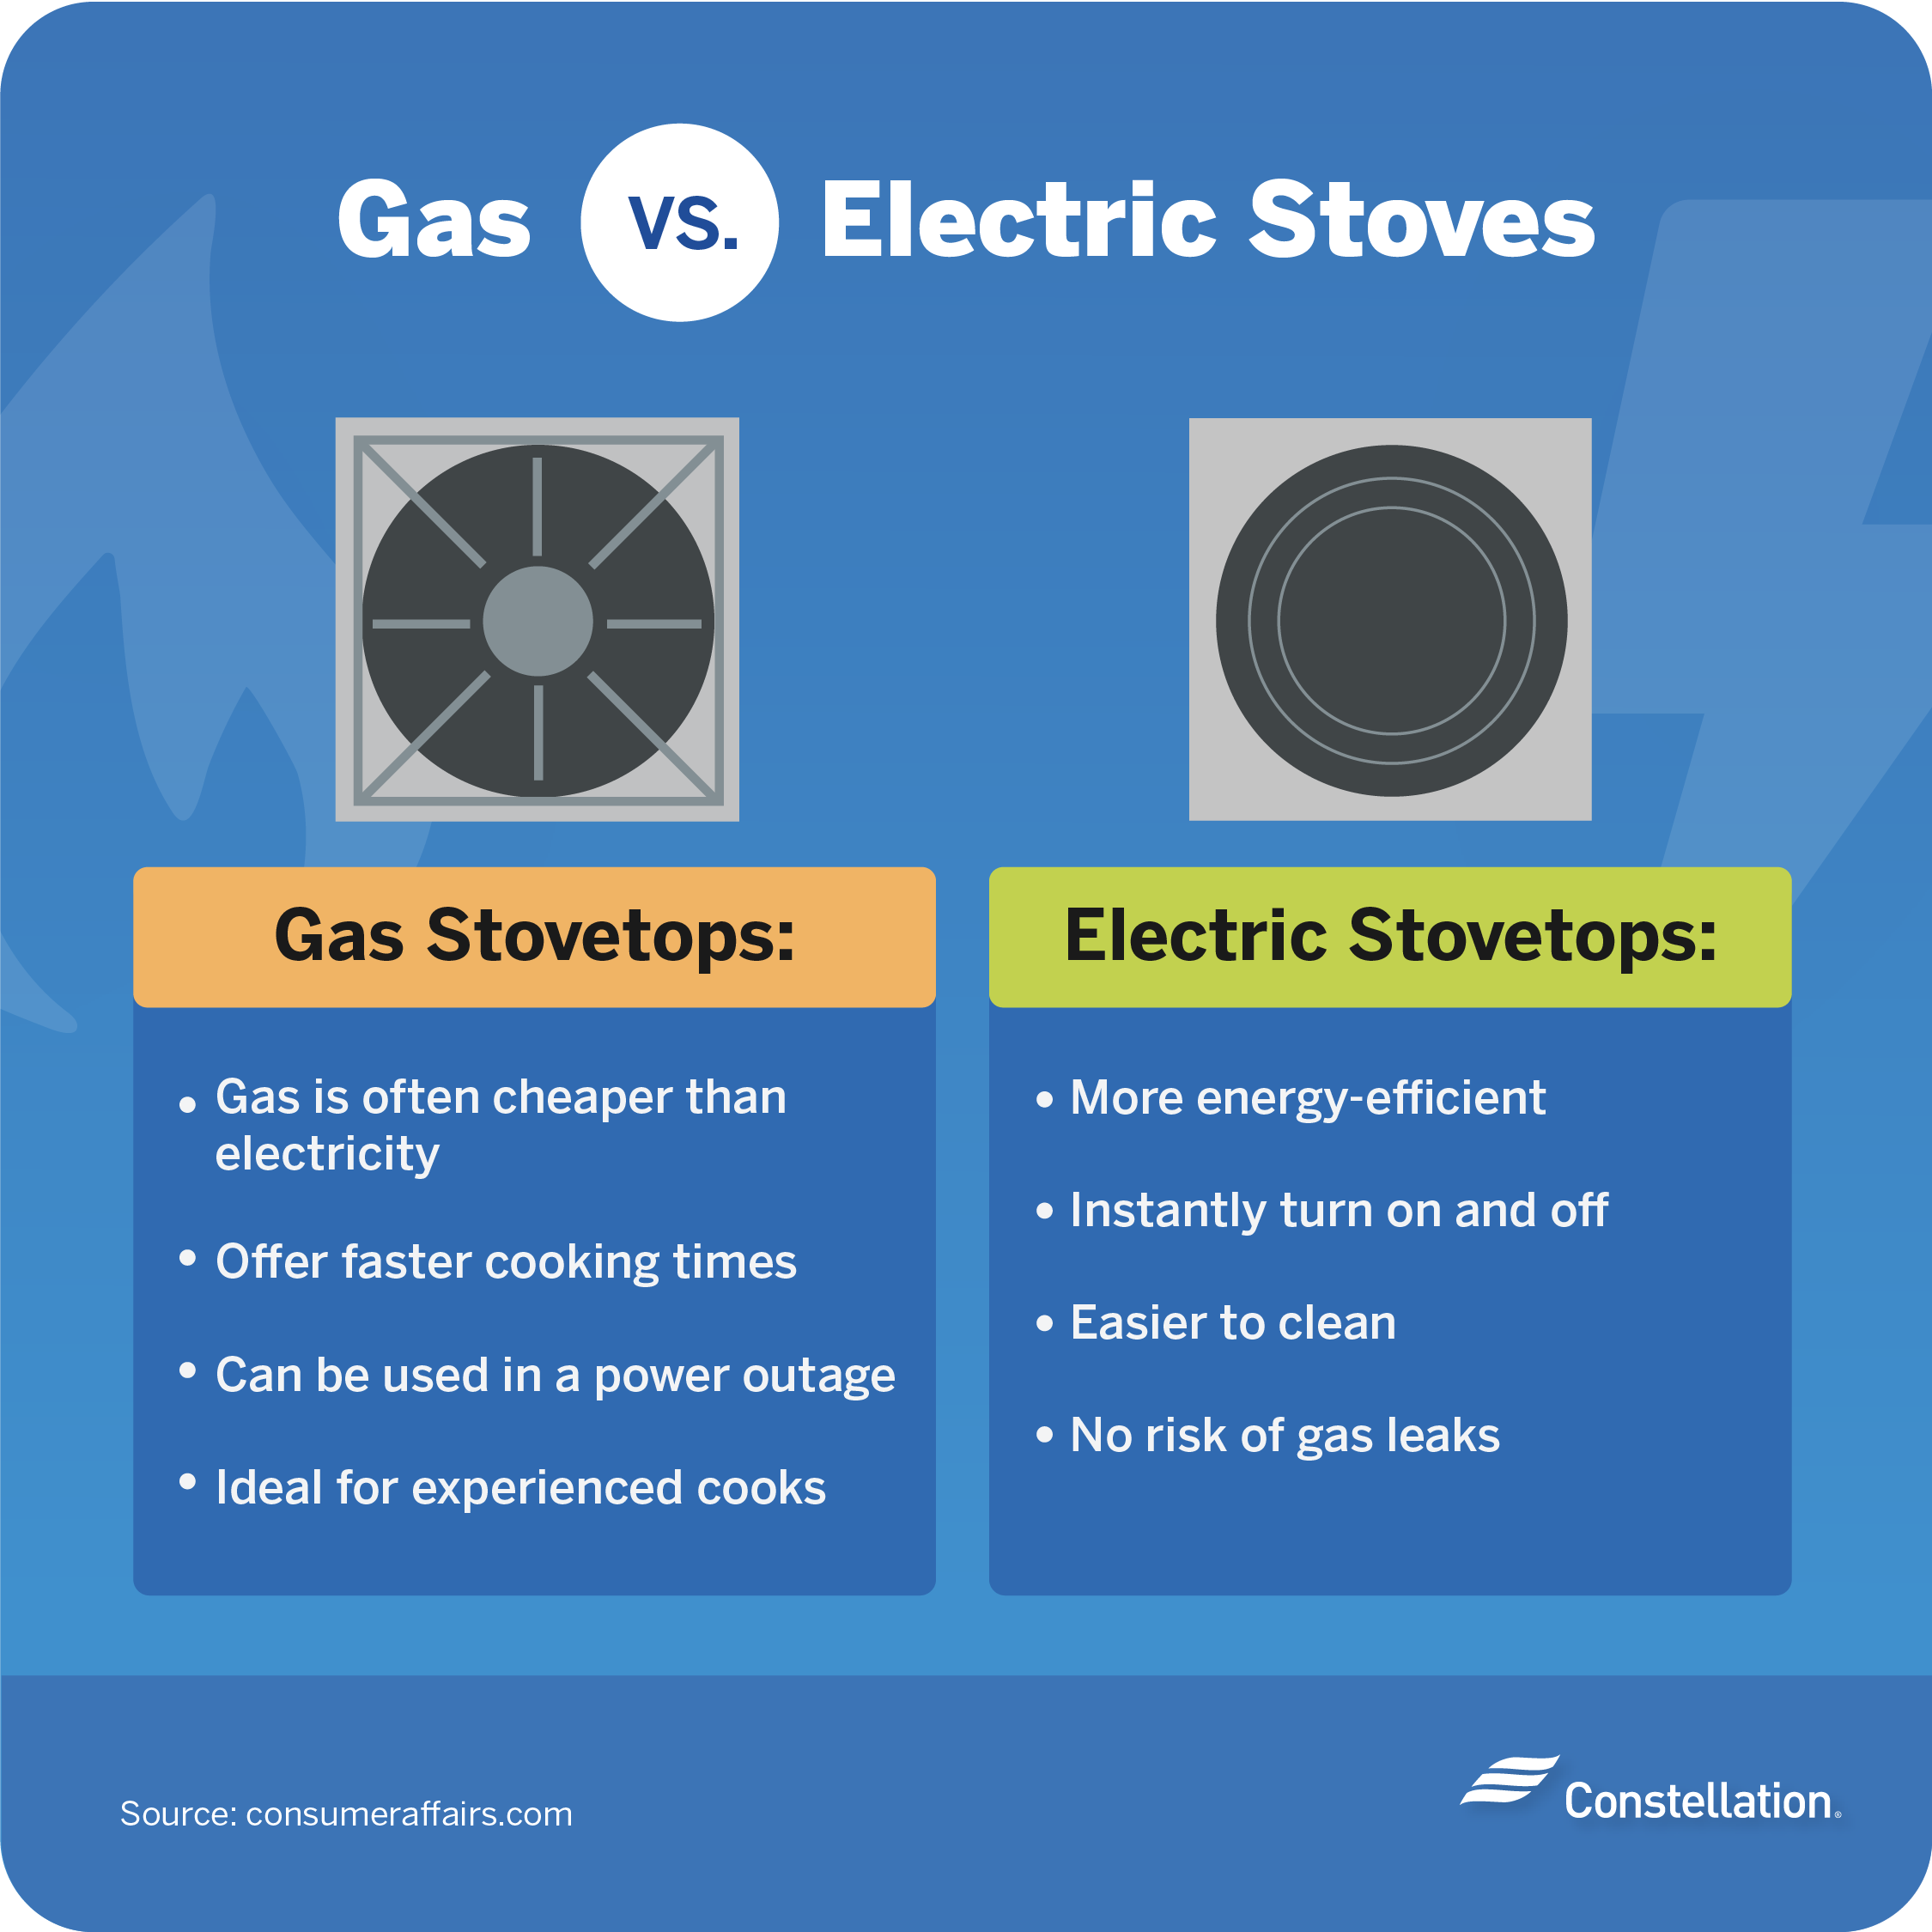 Gas vs electric stoves comparison chart.